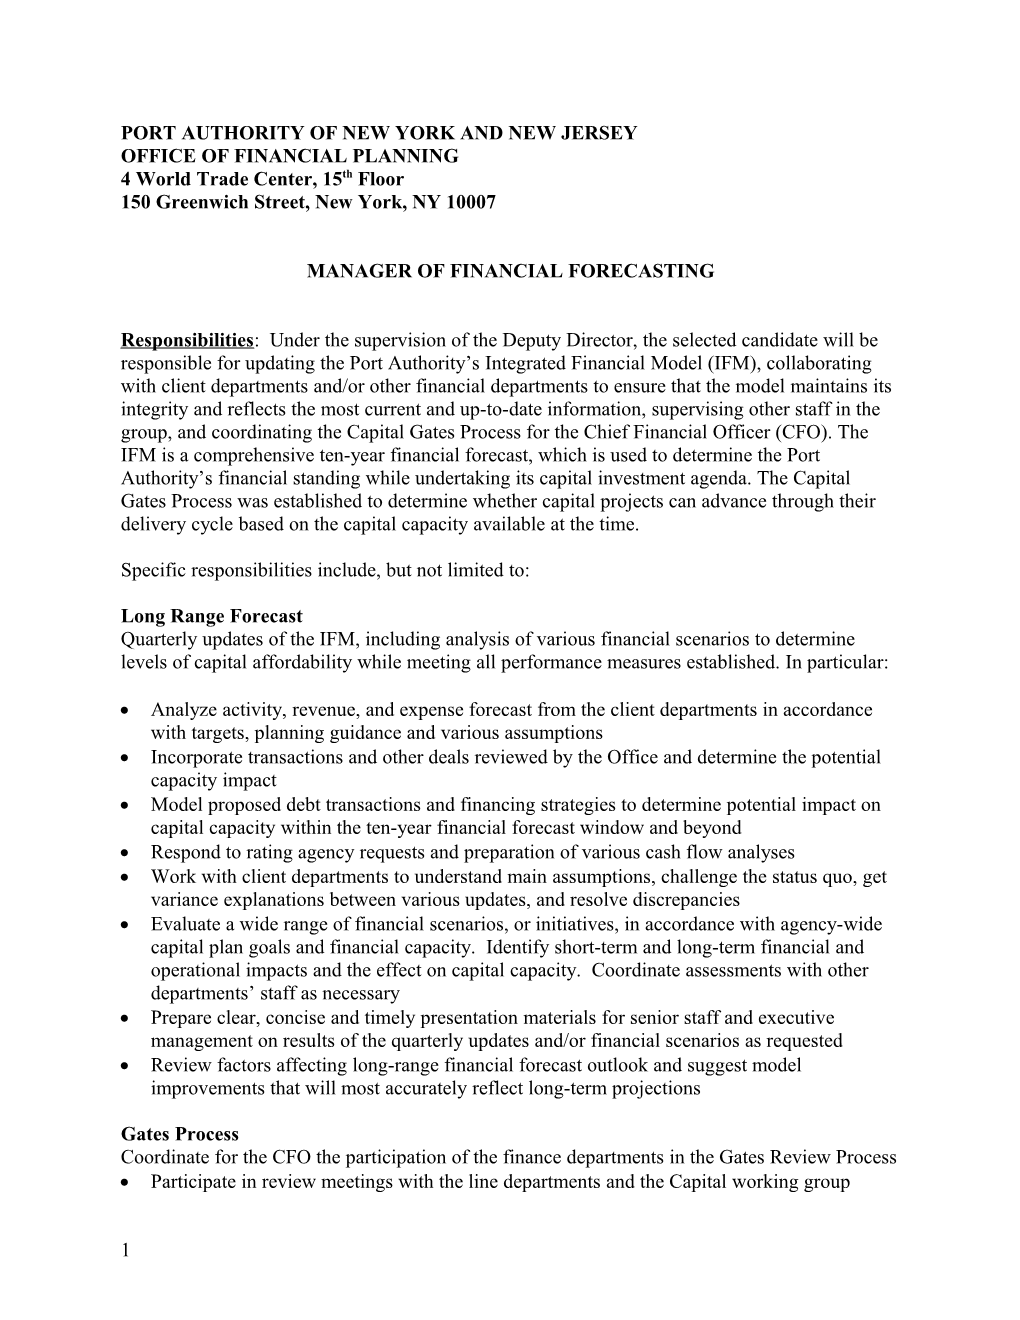 Centralized Capital Support Division MBD Generic Job Description (01/12/07)